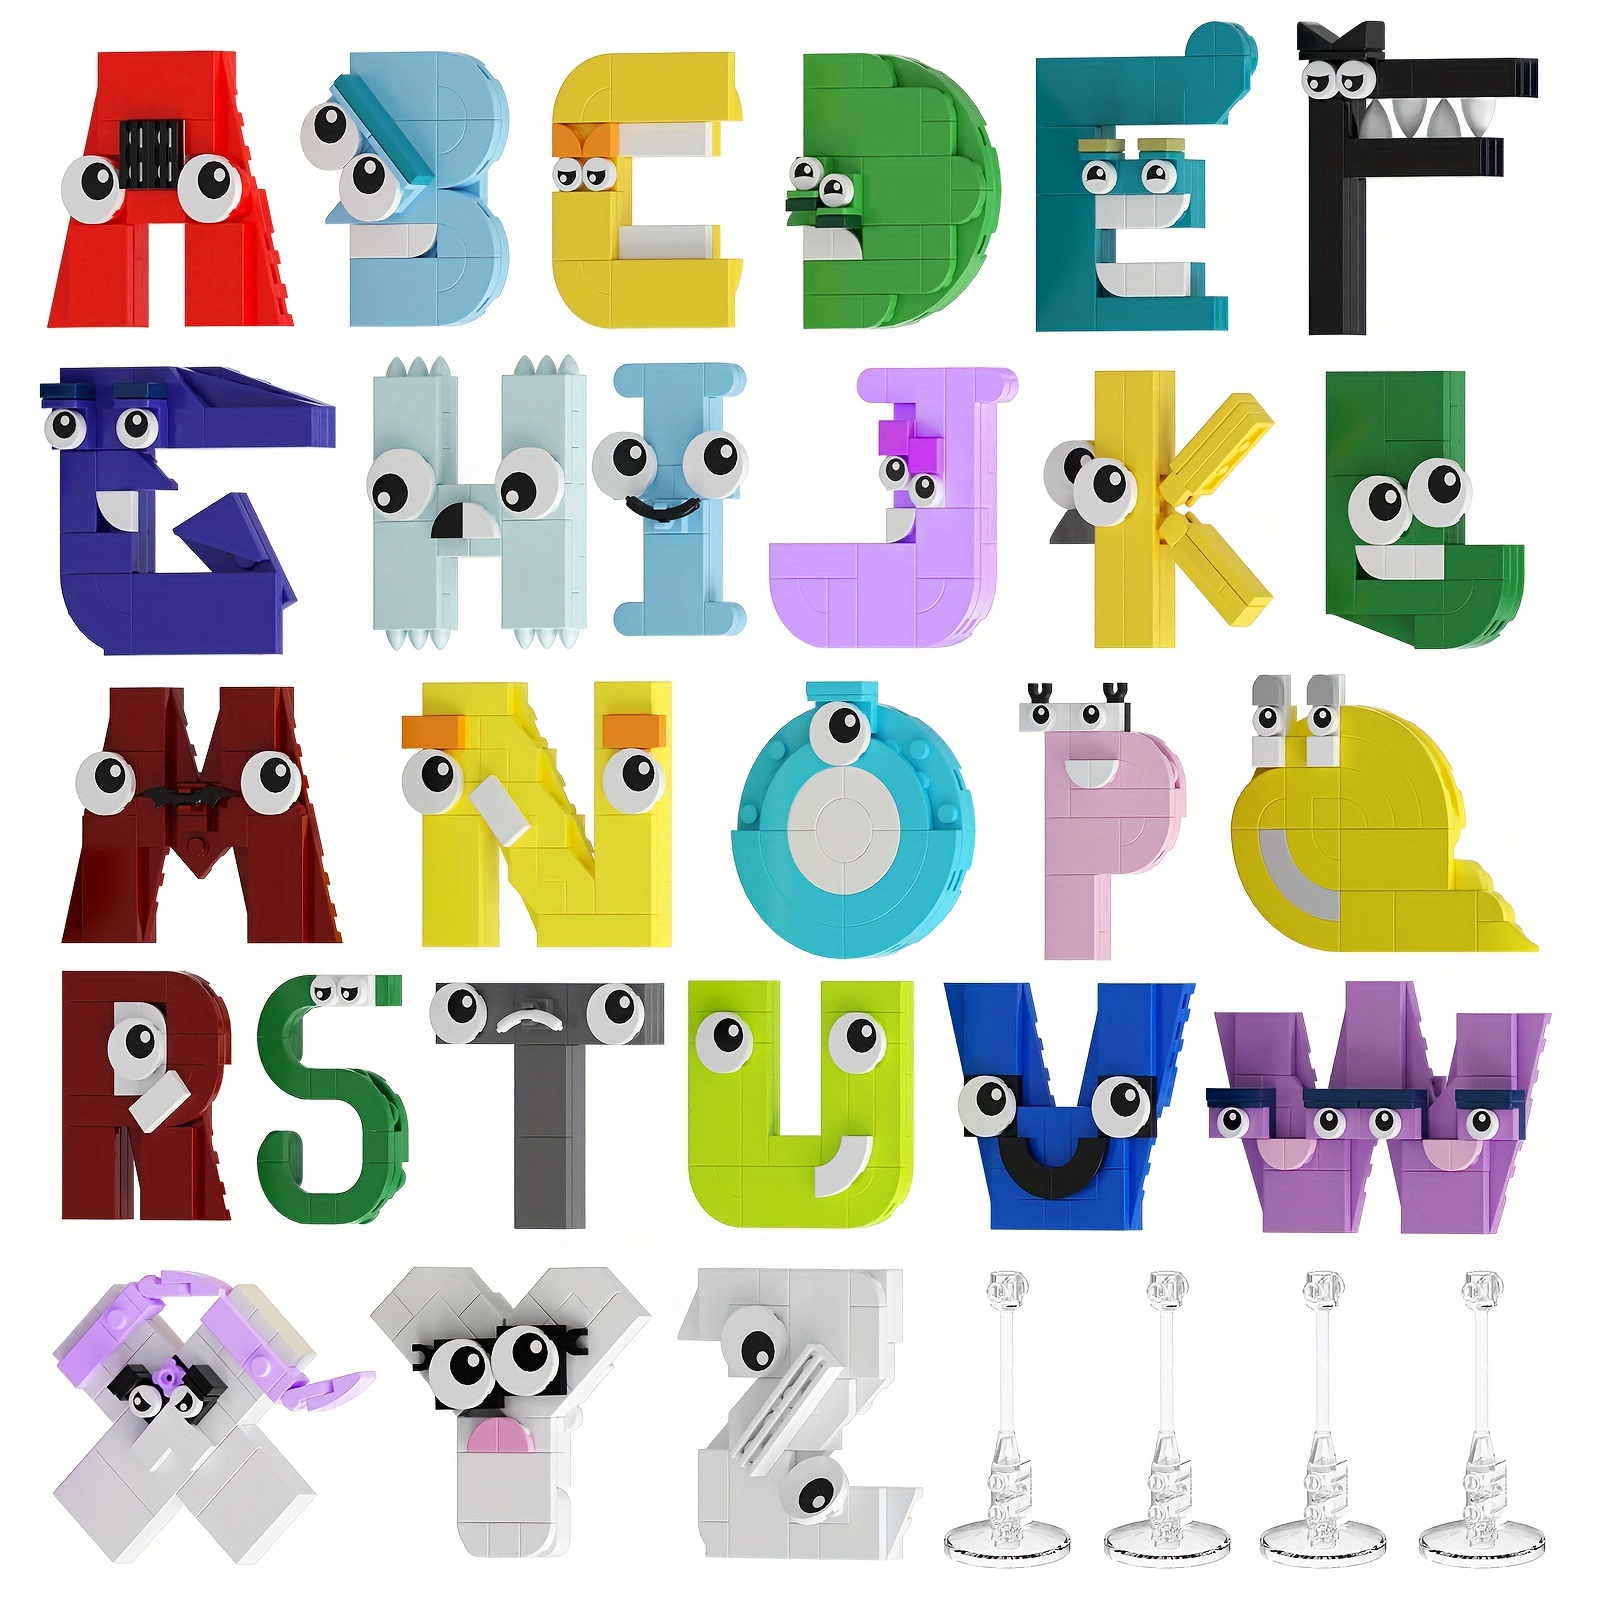 Alphabet Lore A-Z Inspired Toy Figure More Alphabet 